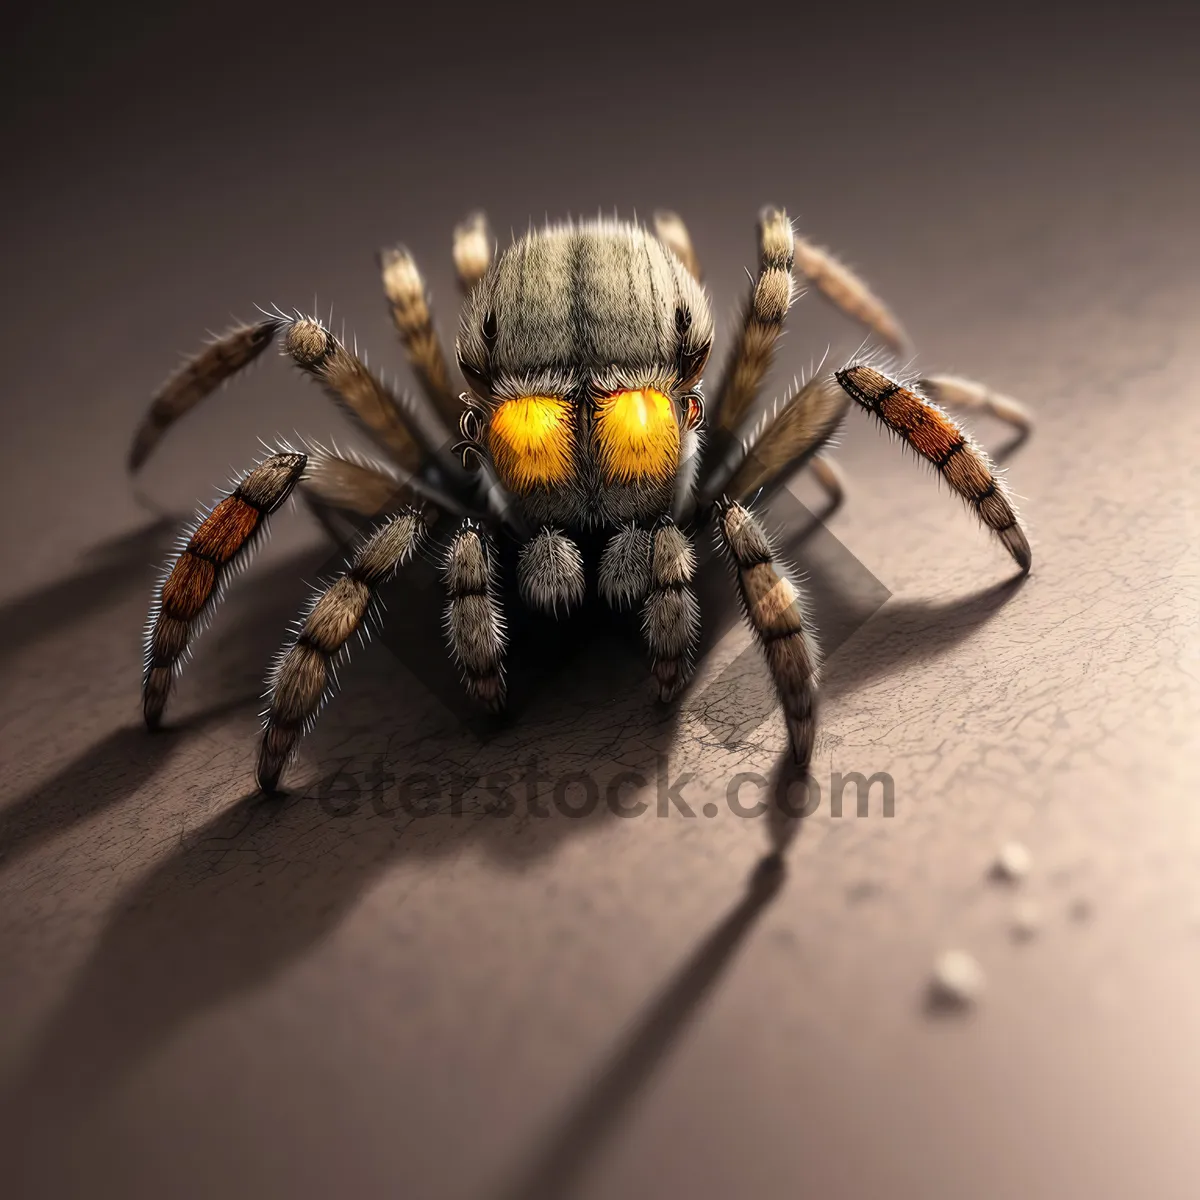 Picture of Hairy Arachnid Leg Closeup: Beware of this Creepy Barn Spider!